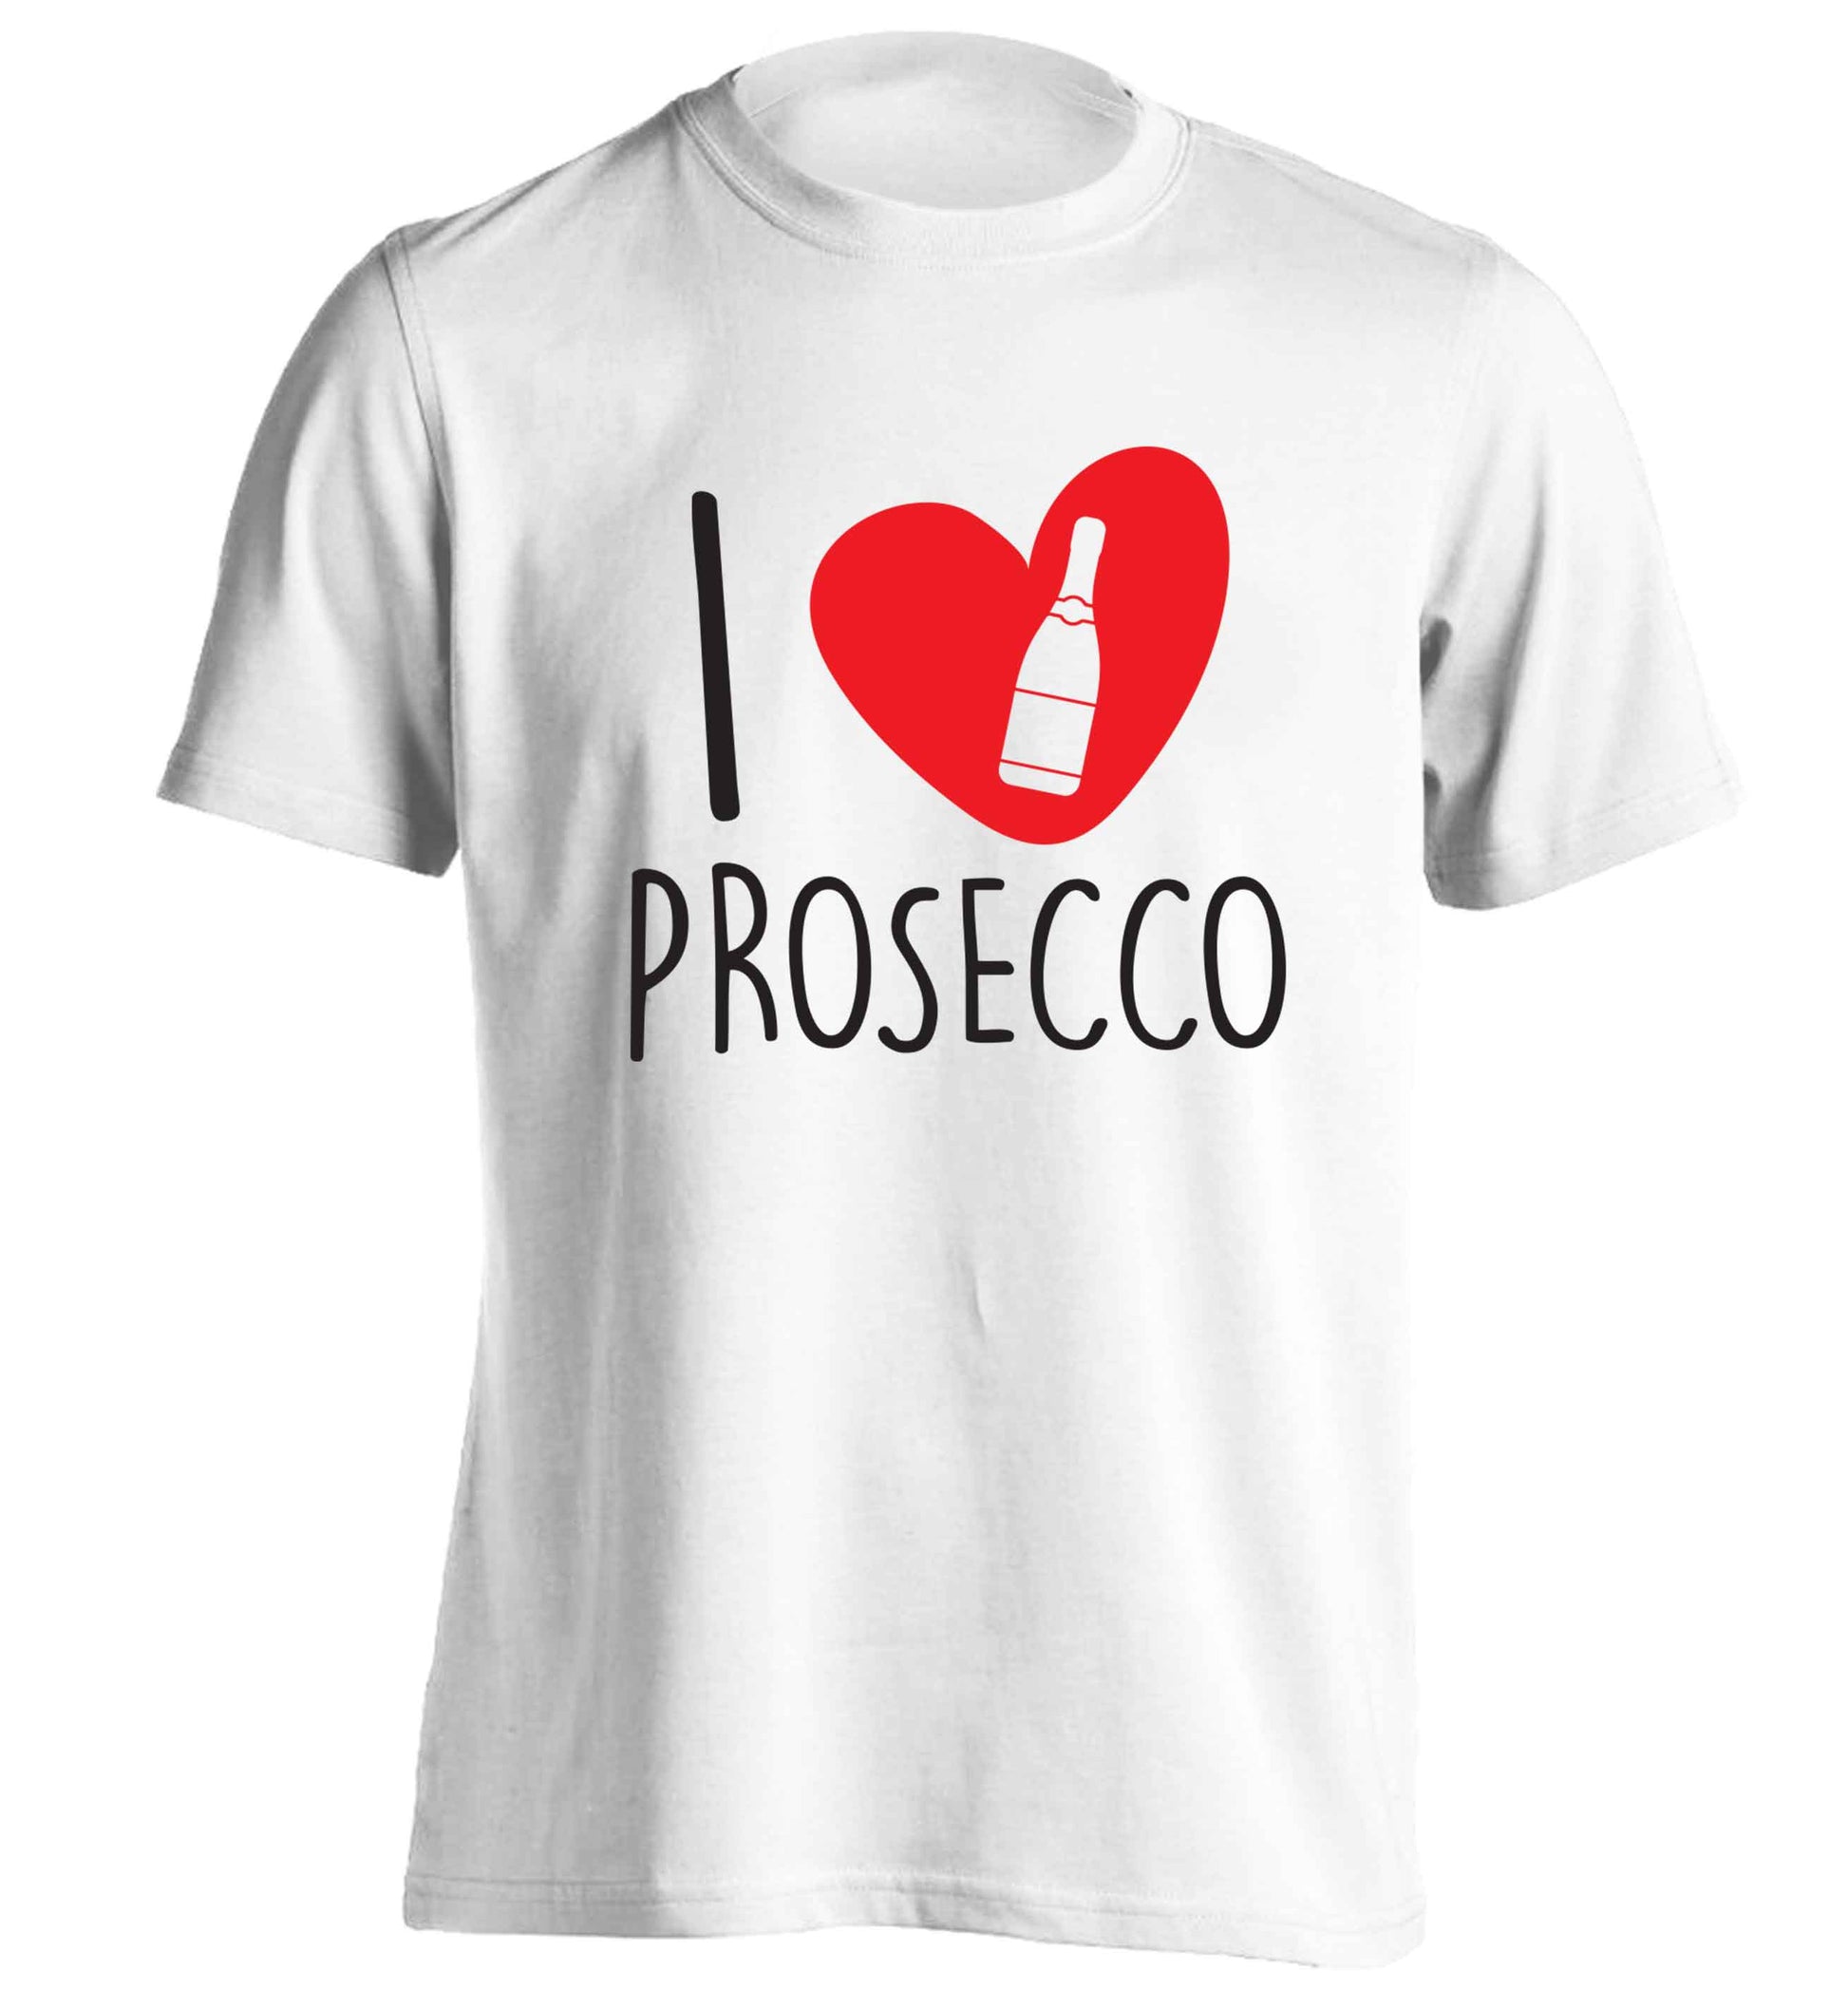 I love prosecco adults unisex white Tshirt 2XL